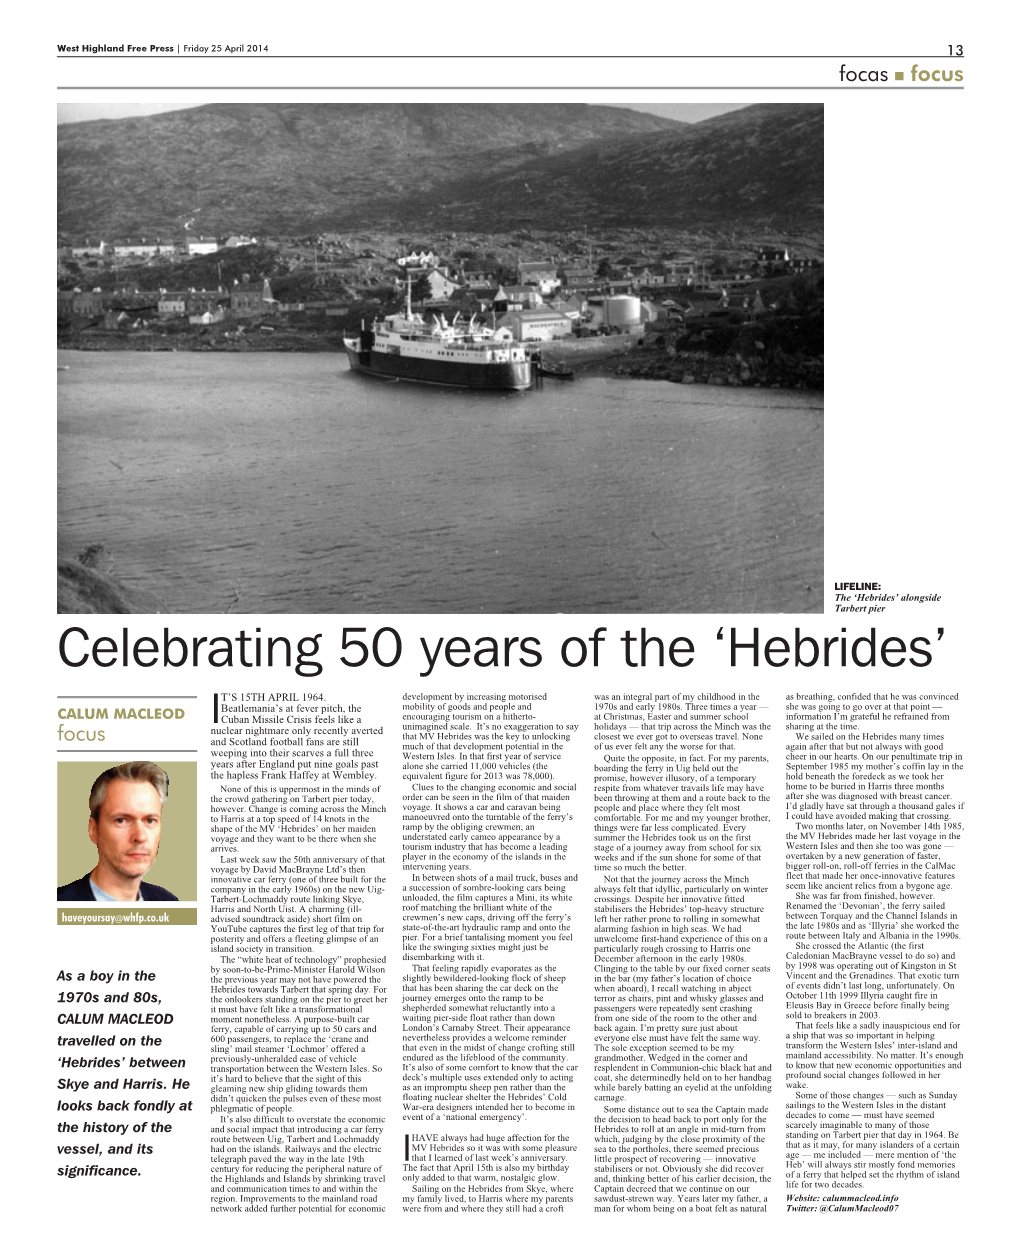 Hebrides’ Alongside Tarbert Pier Celebrating 50 Years of the ‘Hebrides’